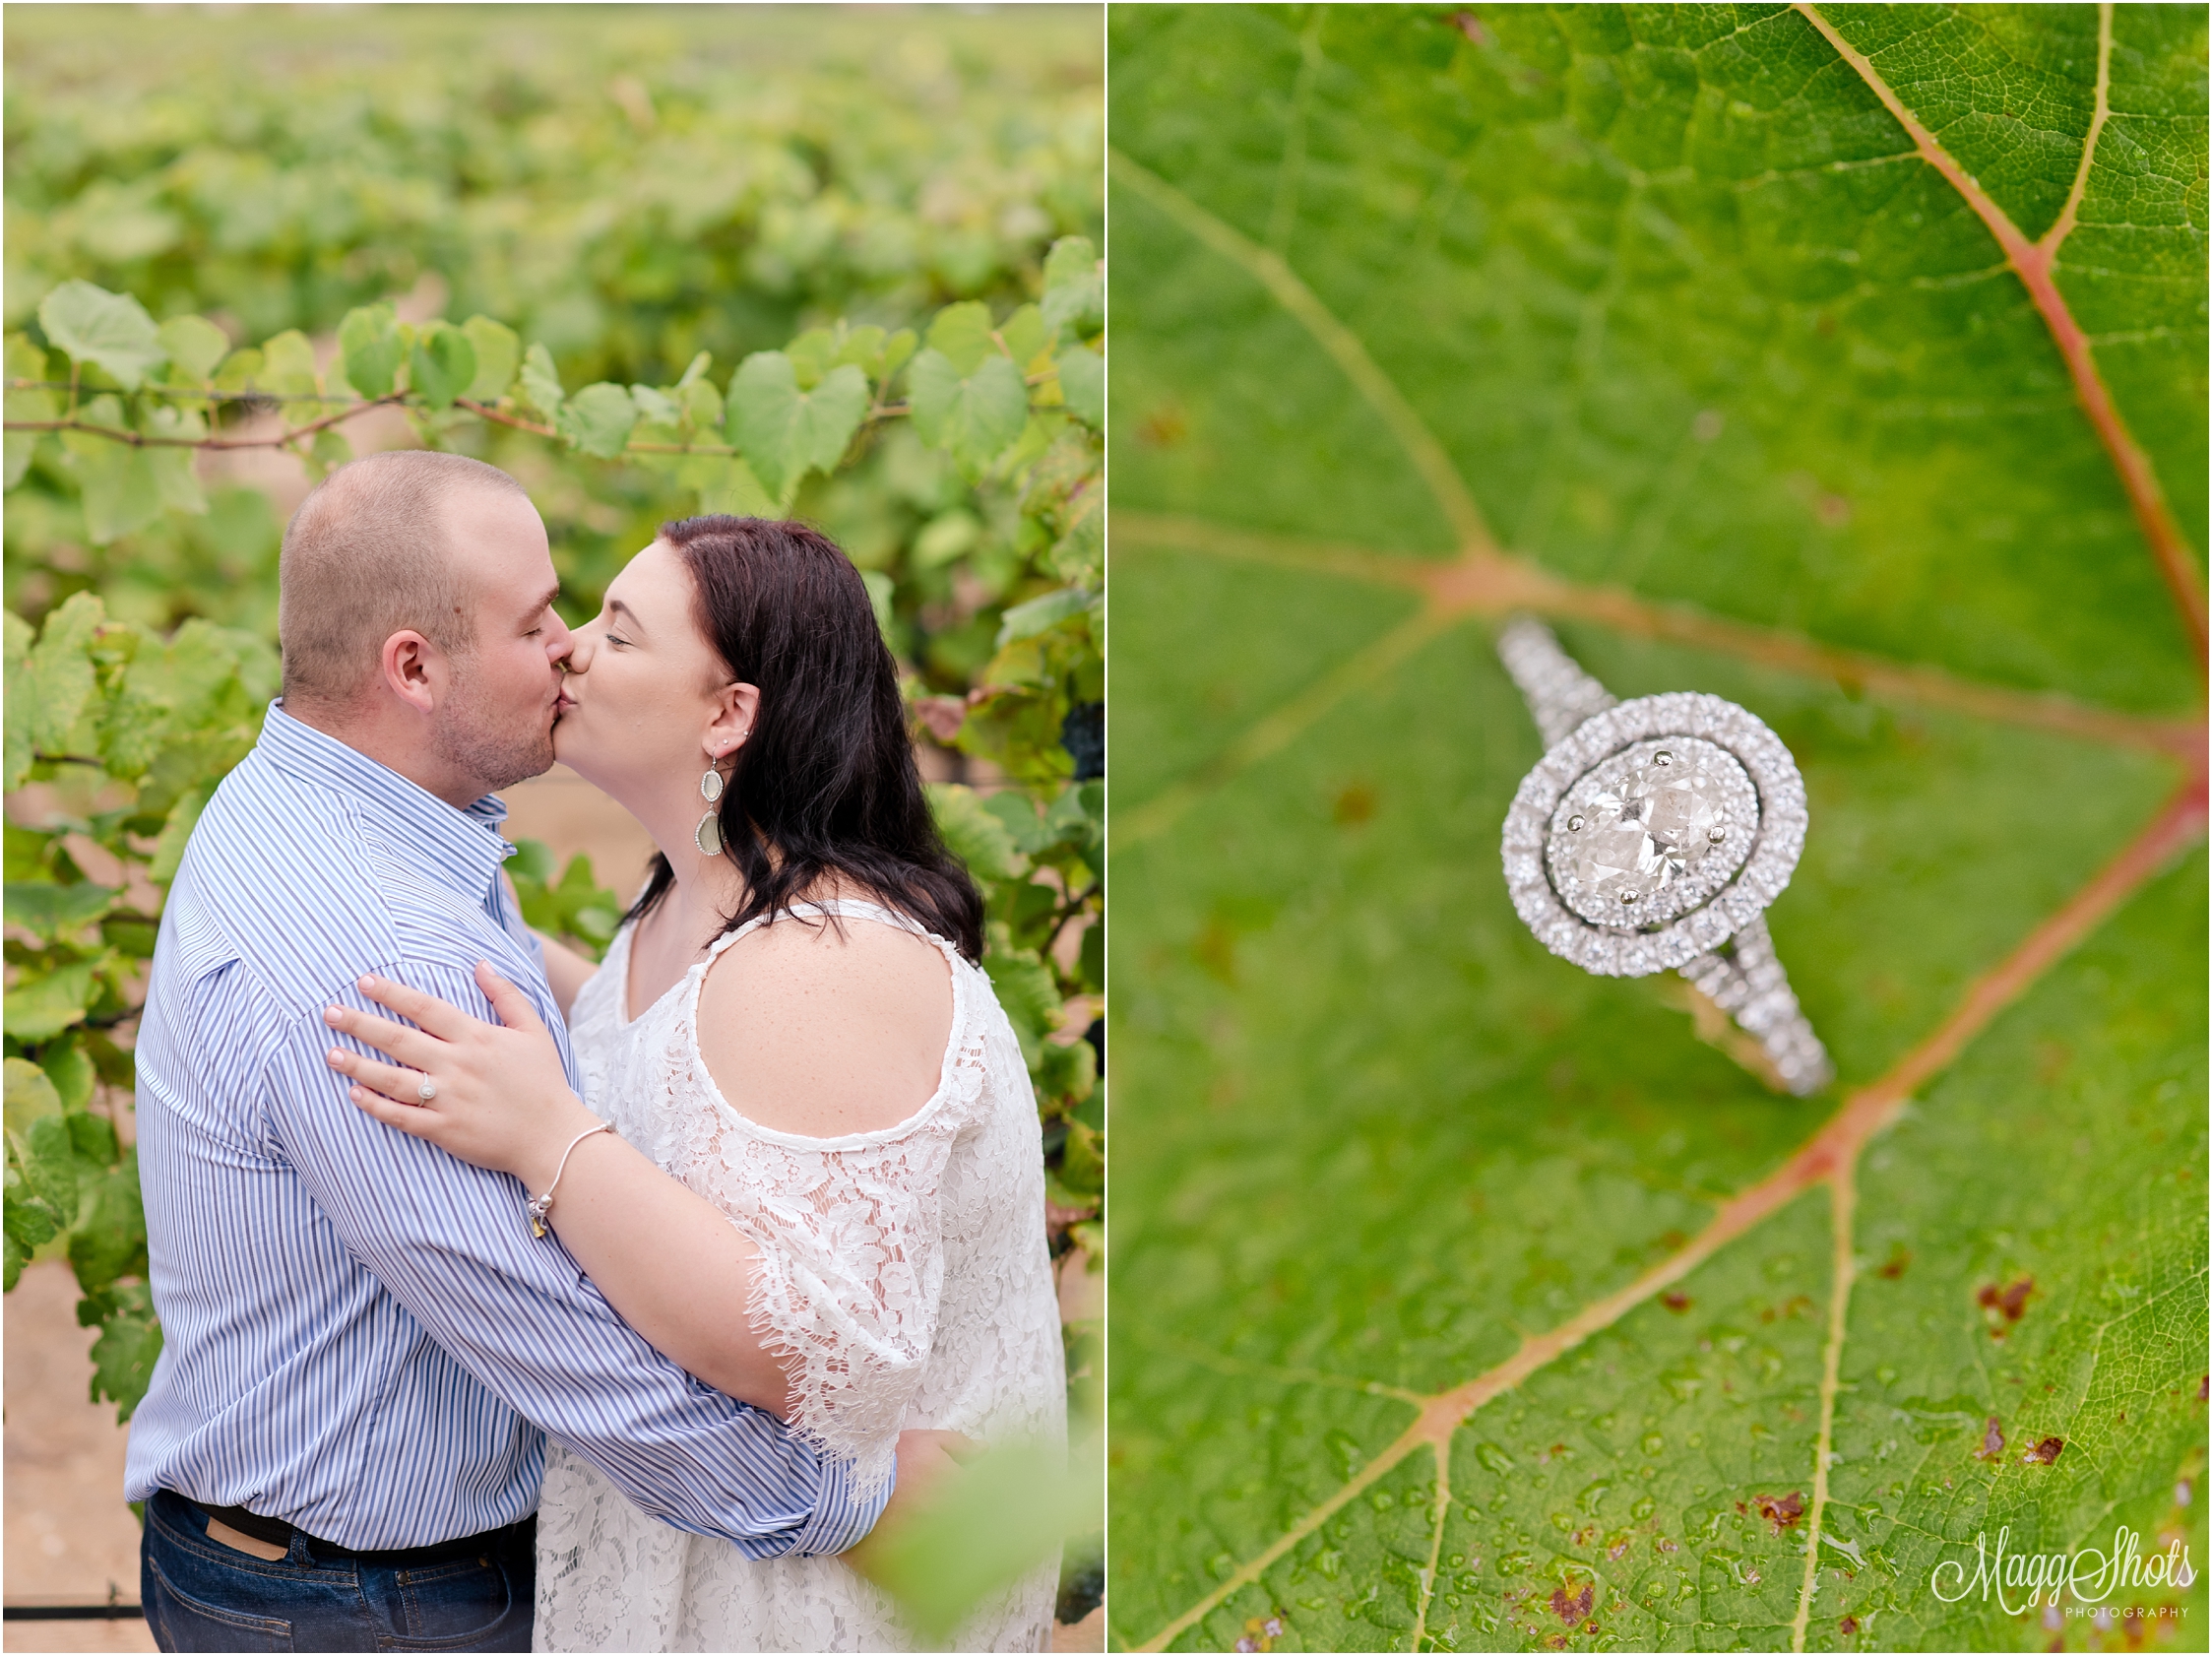 Engagement Shoot, Vineyards, Delaney Vineyard, Grapevine, MaggShots Photography, MaggShots, Professional Photography, Ring, Ring shot, Bling